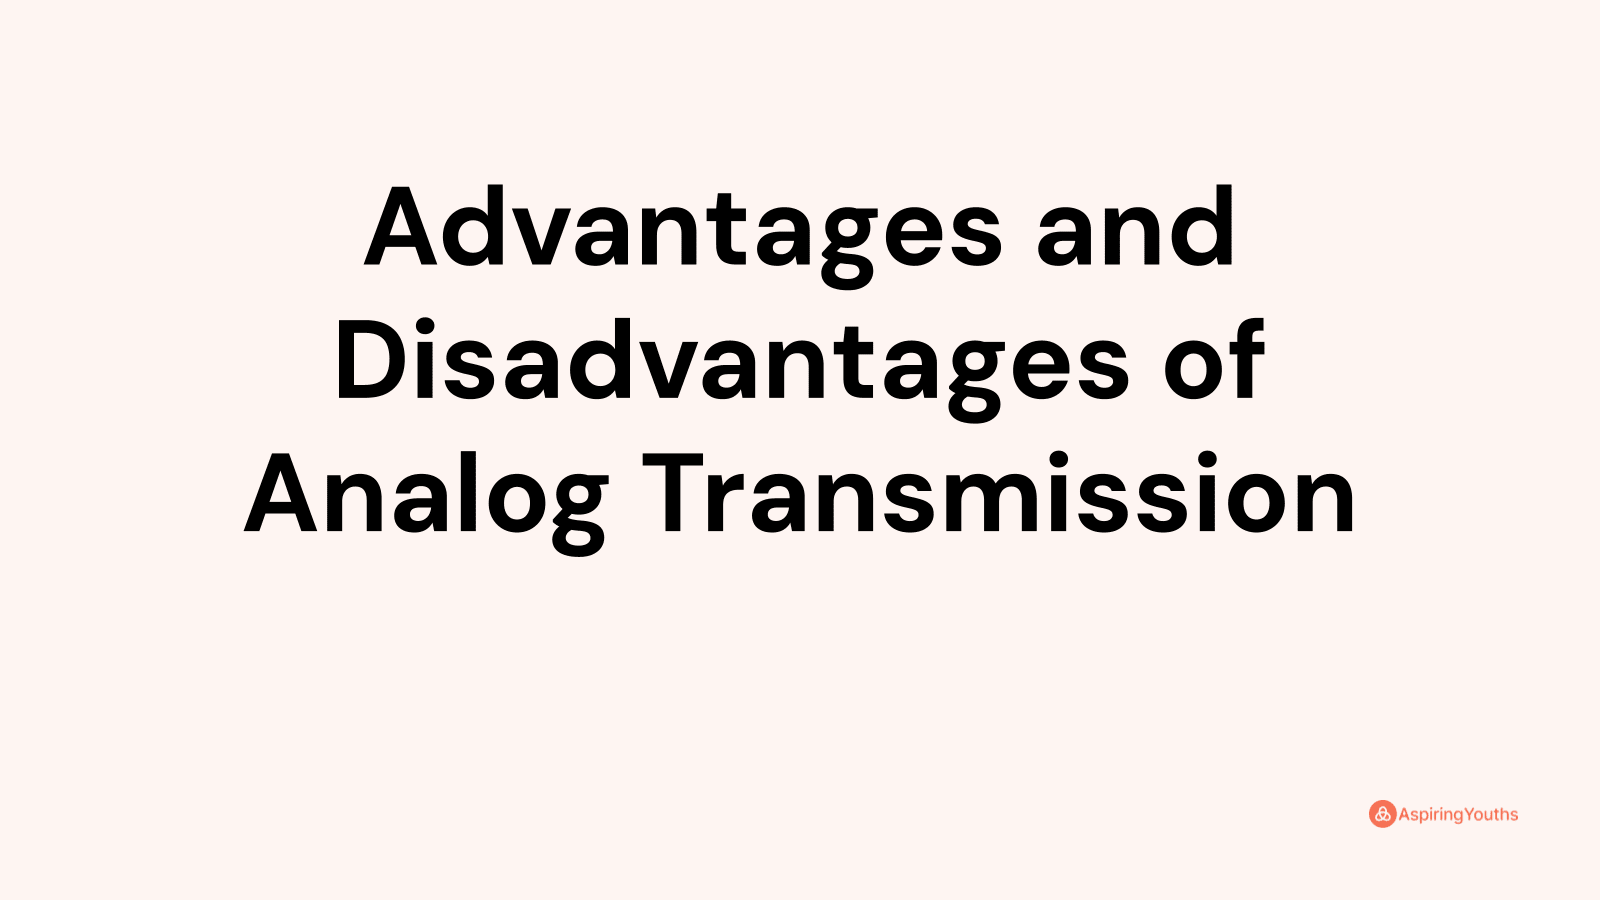 Advantages and disadvantages of Analog Transmission